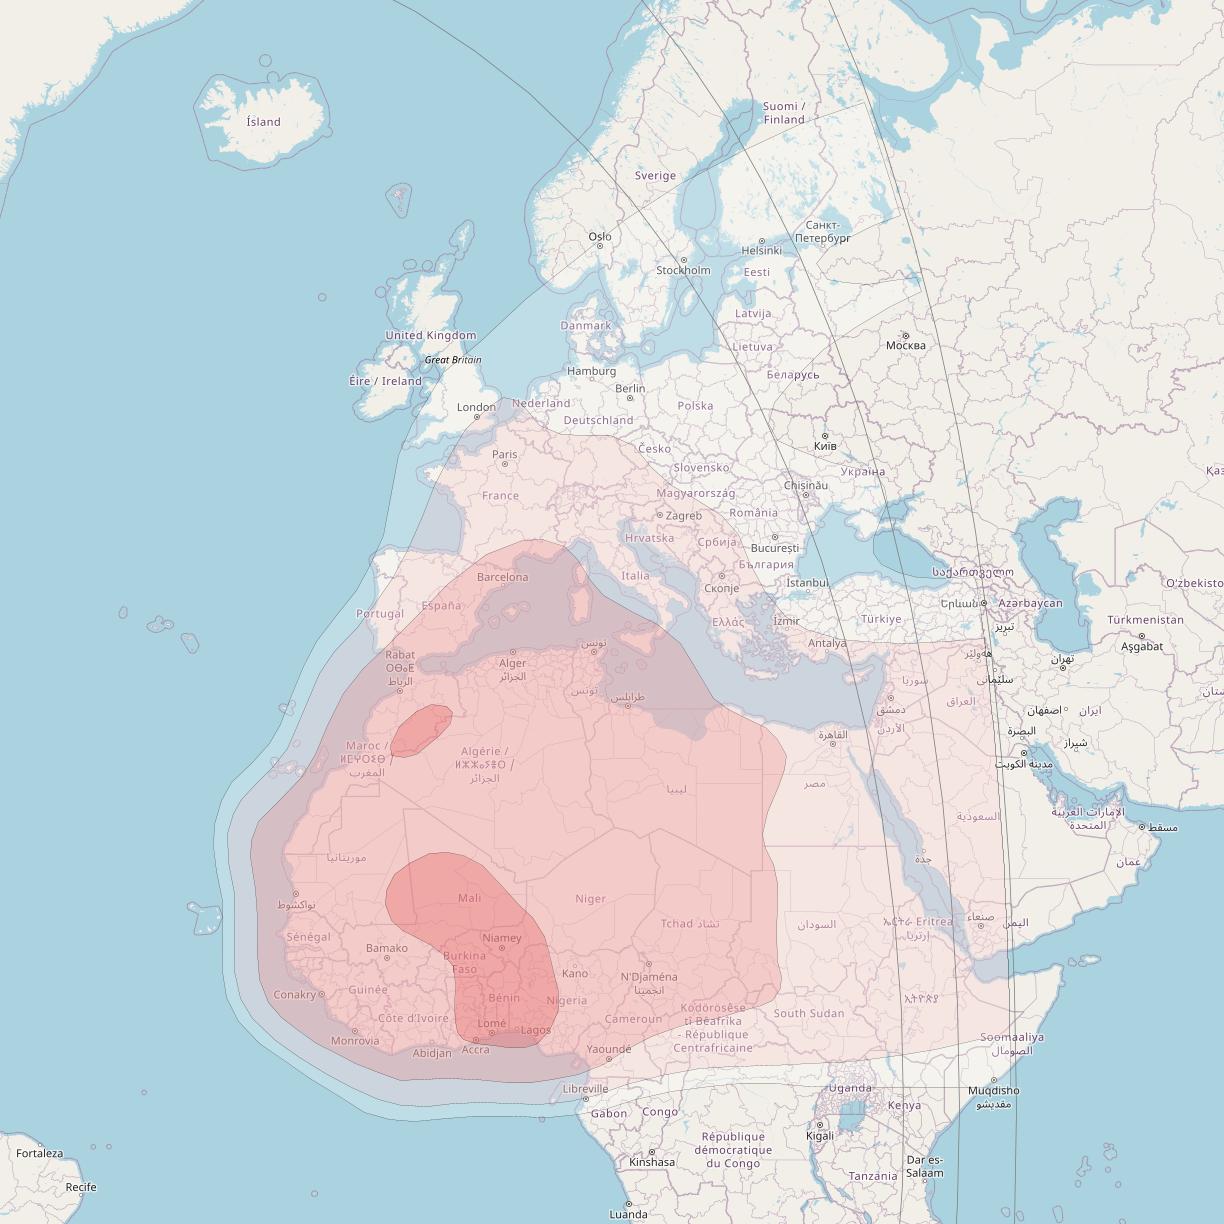 Intelsat 35e at 34° W downlink Ku-band Africa/Europe beam coverage map